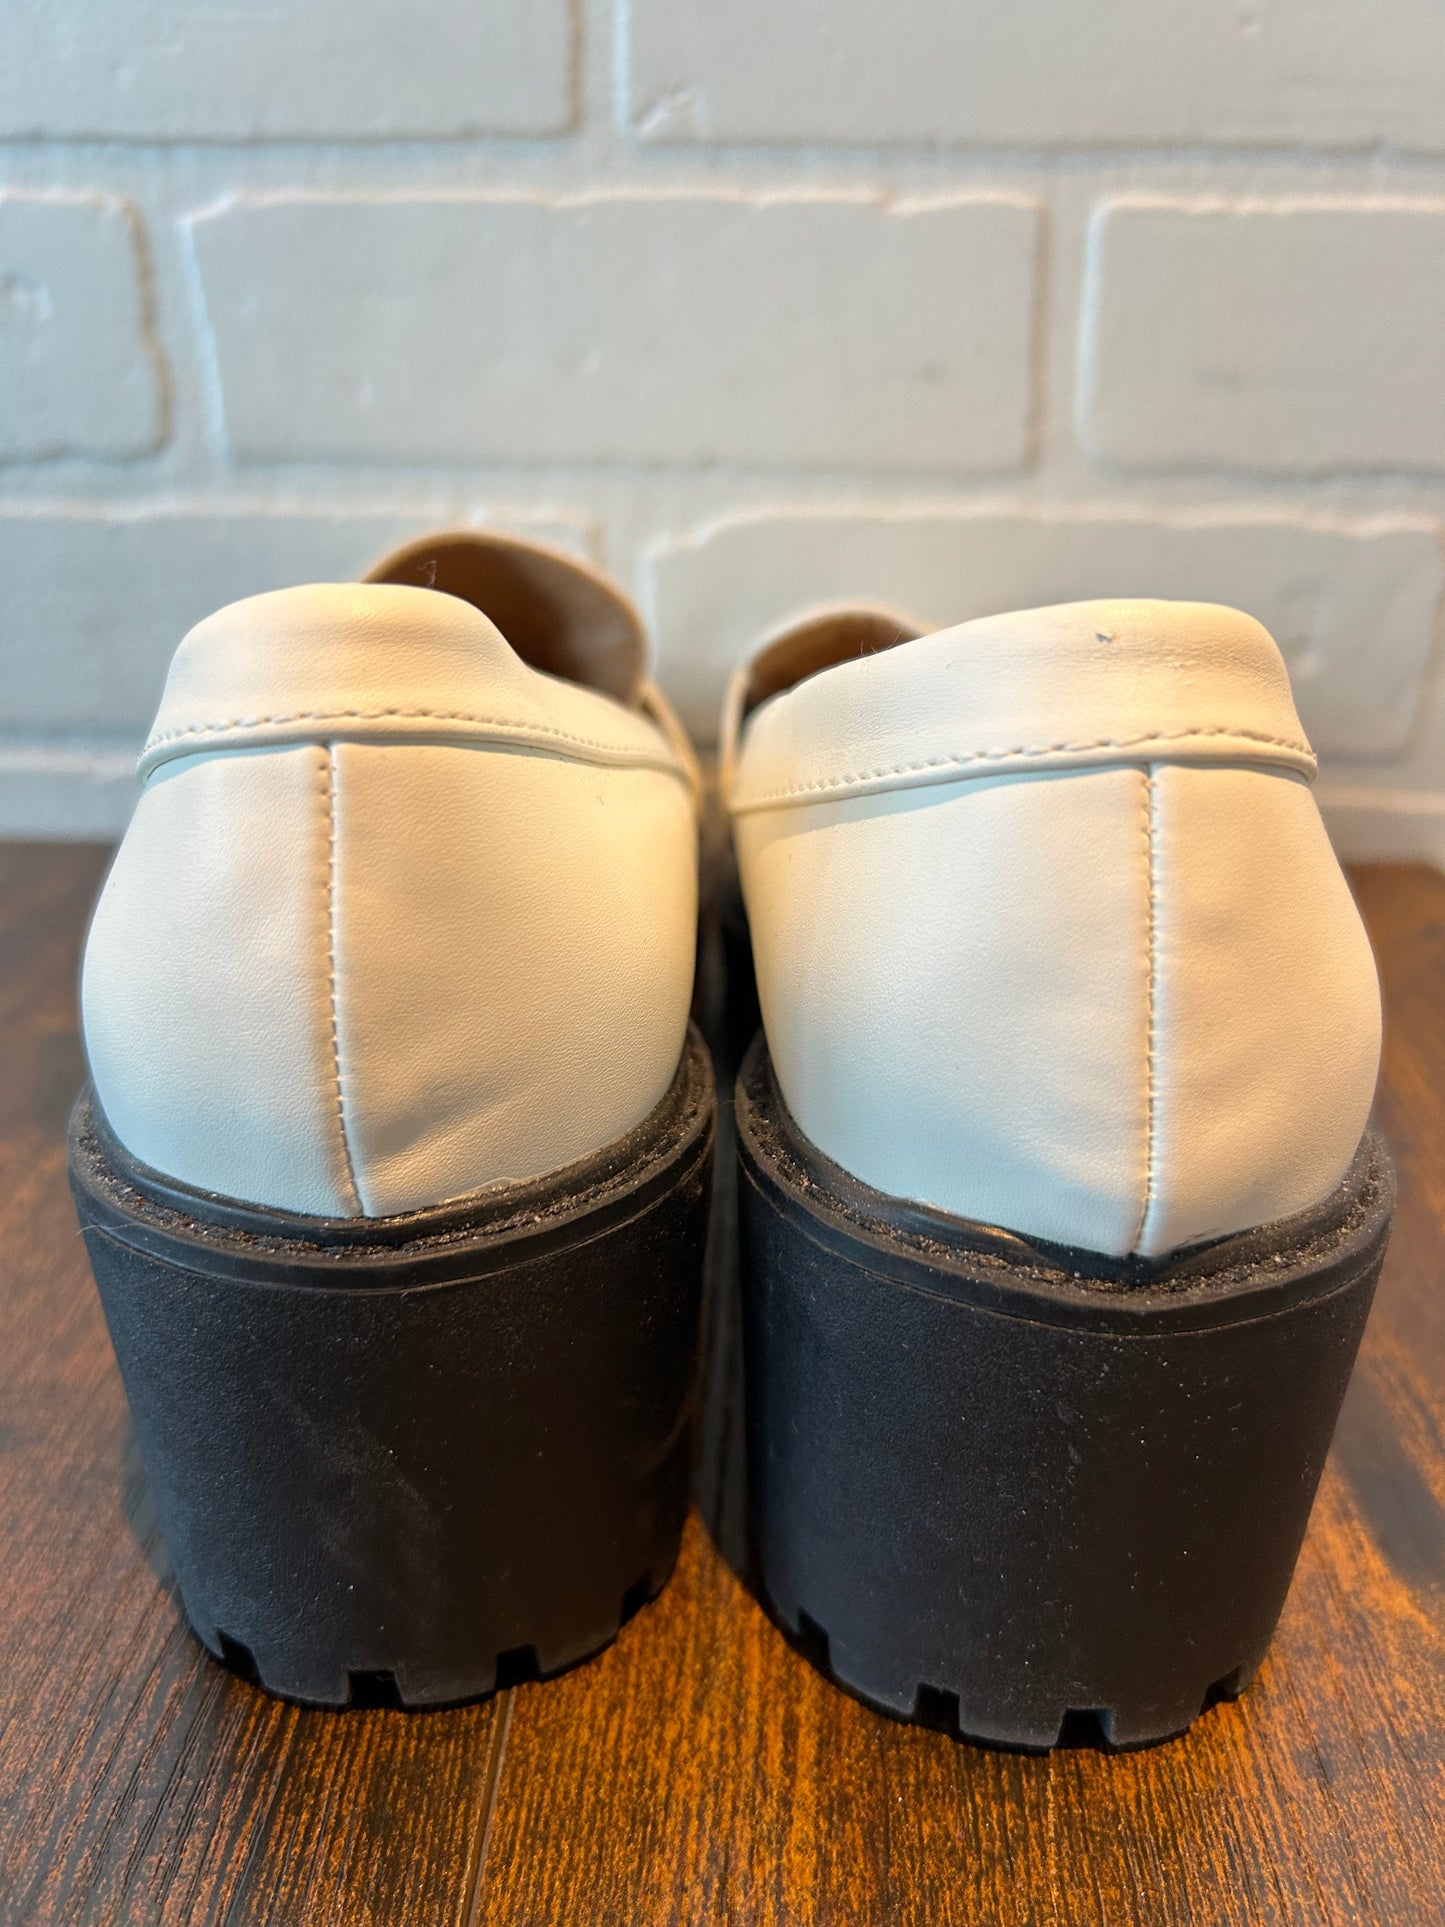 White Shoes Flats Dolce Vita, Size 8